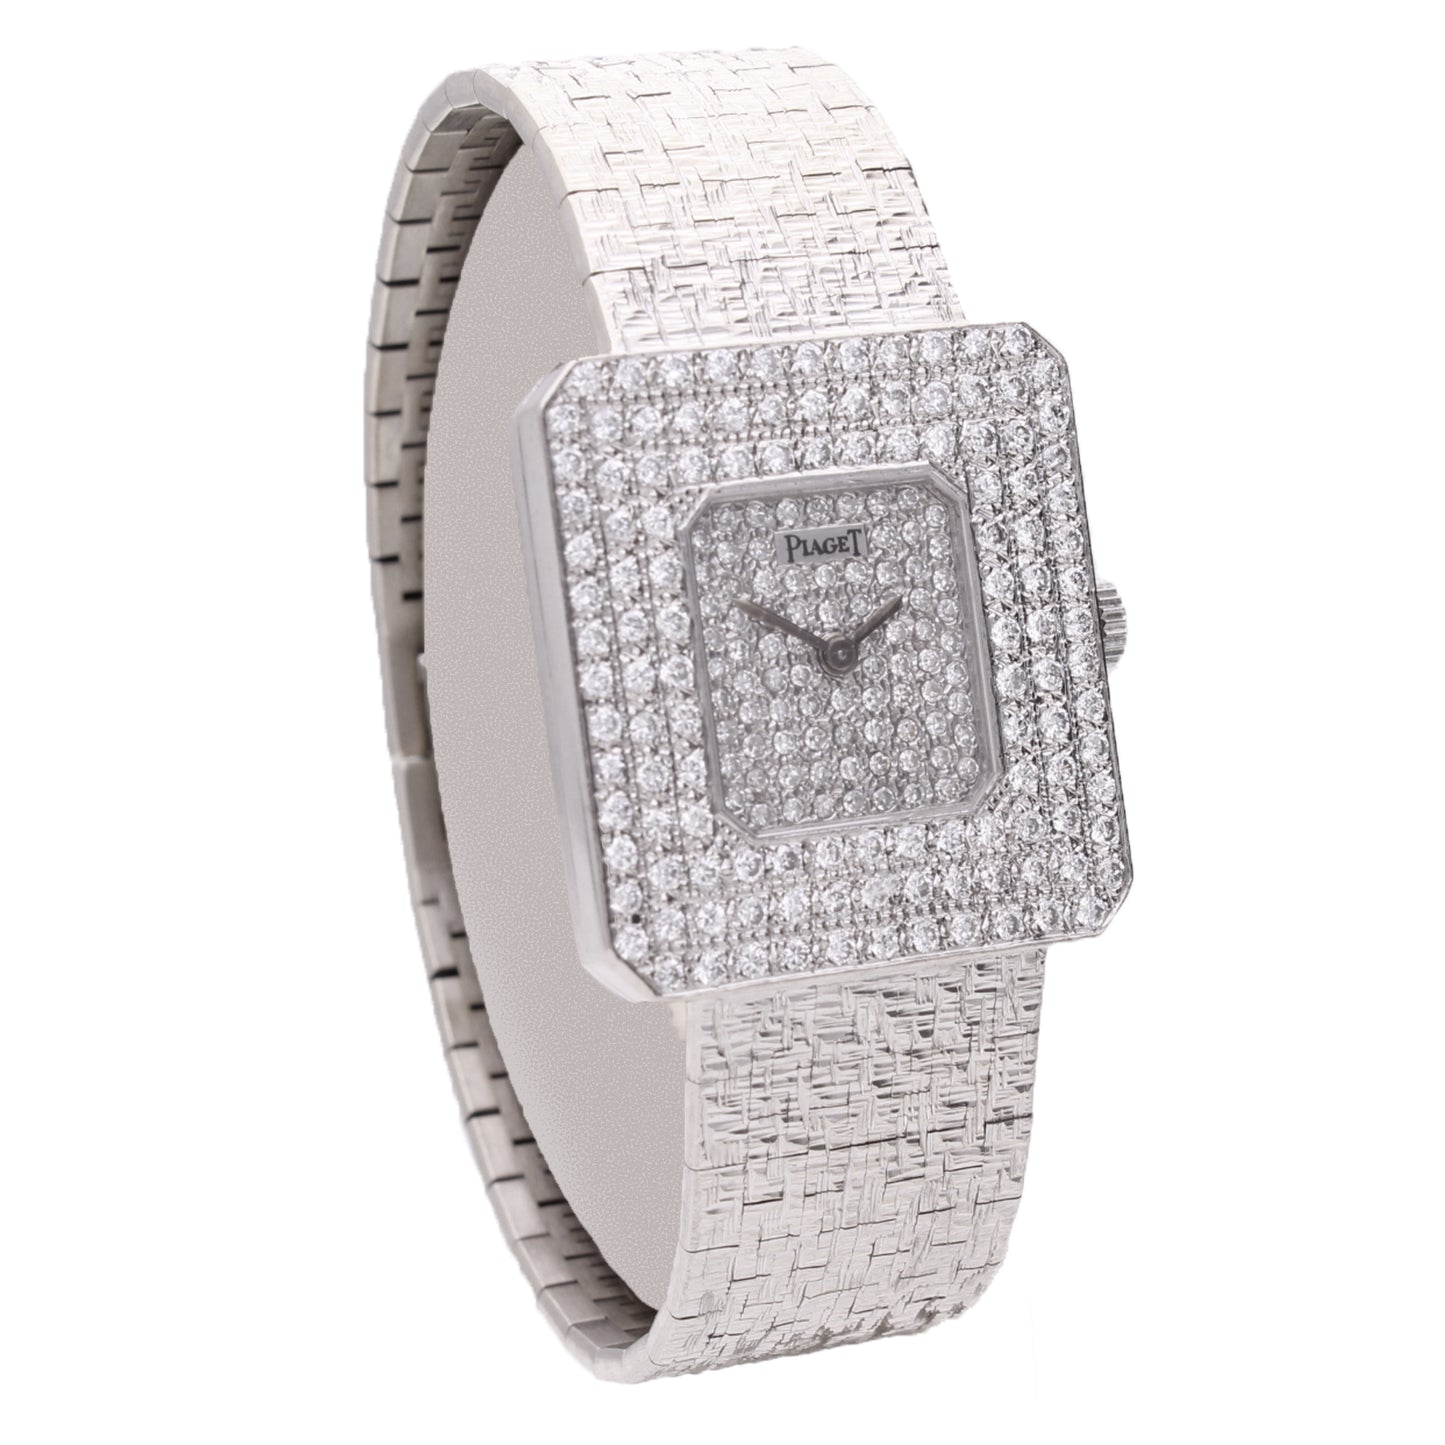 18ct white gold Protocole diamond set bracelet watch. Made 1970